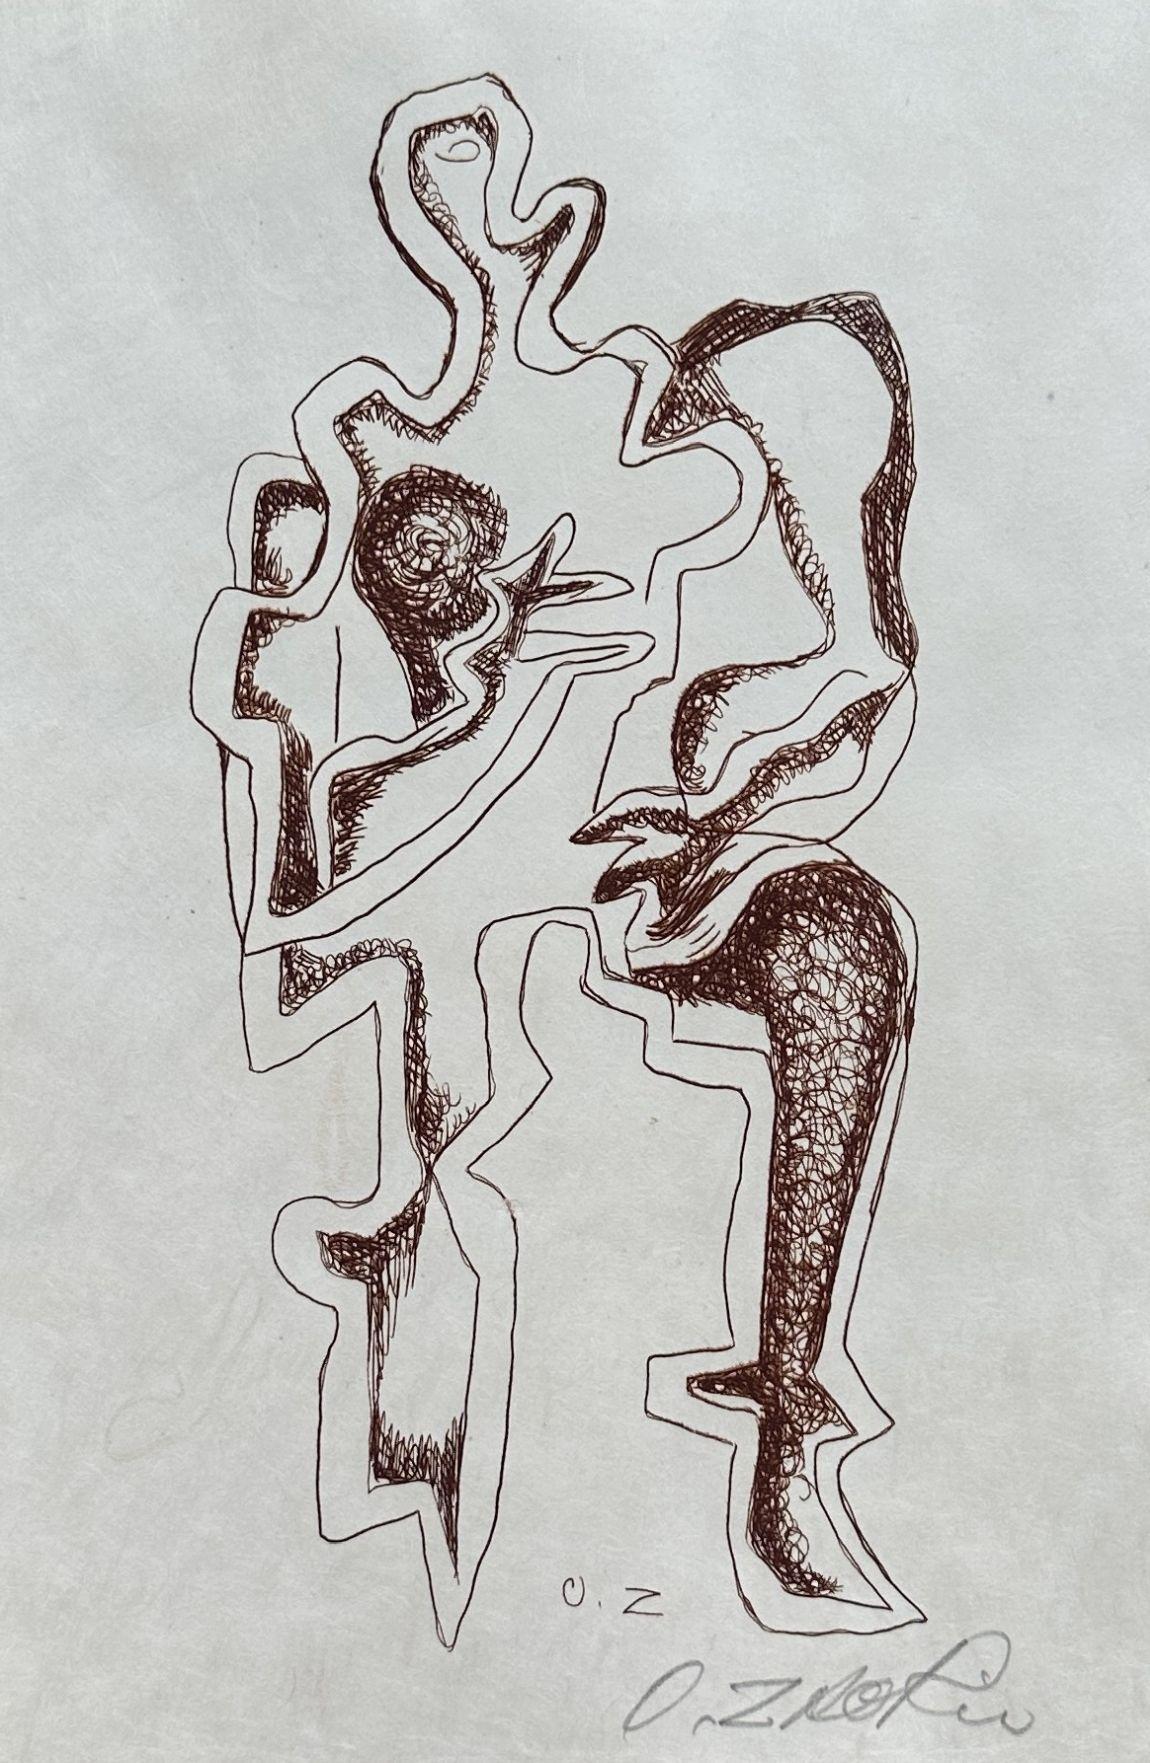 Ossip Zadkine Figurative Print - Surrealist Man - Original Etching Hand Signed - Czwiklitzer n°57